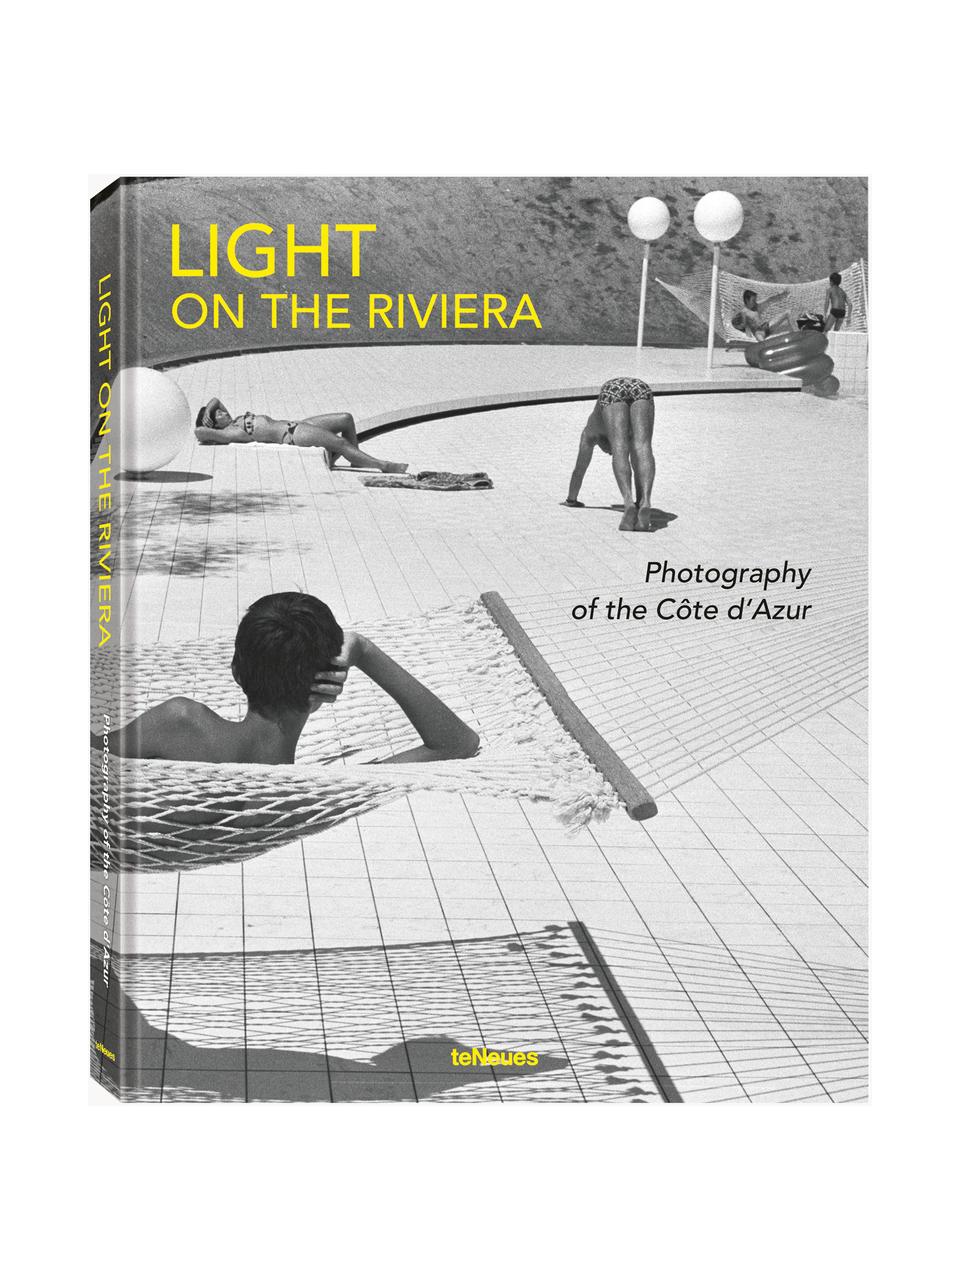 Libro illustrato Light on the Riviera, Carta, Libro illustrato Light on the Riviera, Lung. 34 x Larg. 28 cm